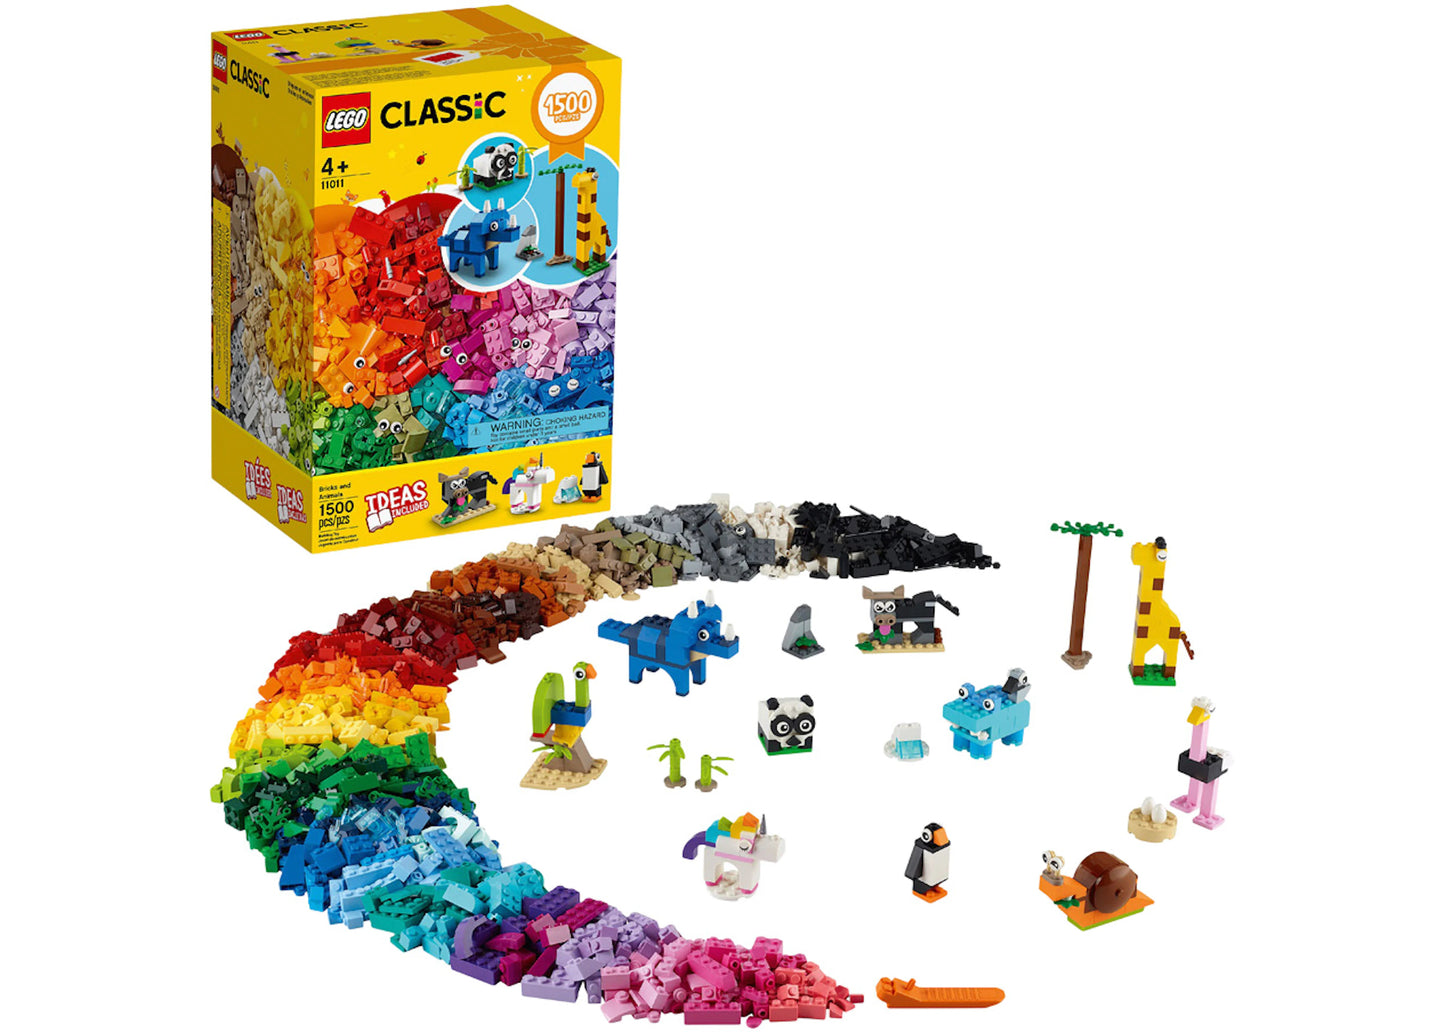 【LEGO】 EDUCATION CLASSIC (11011)